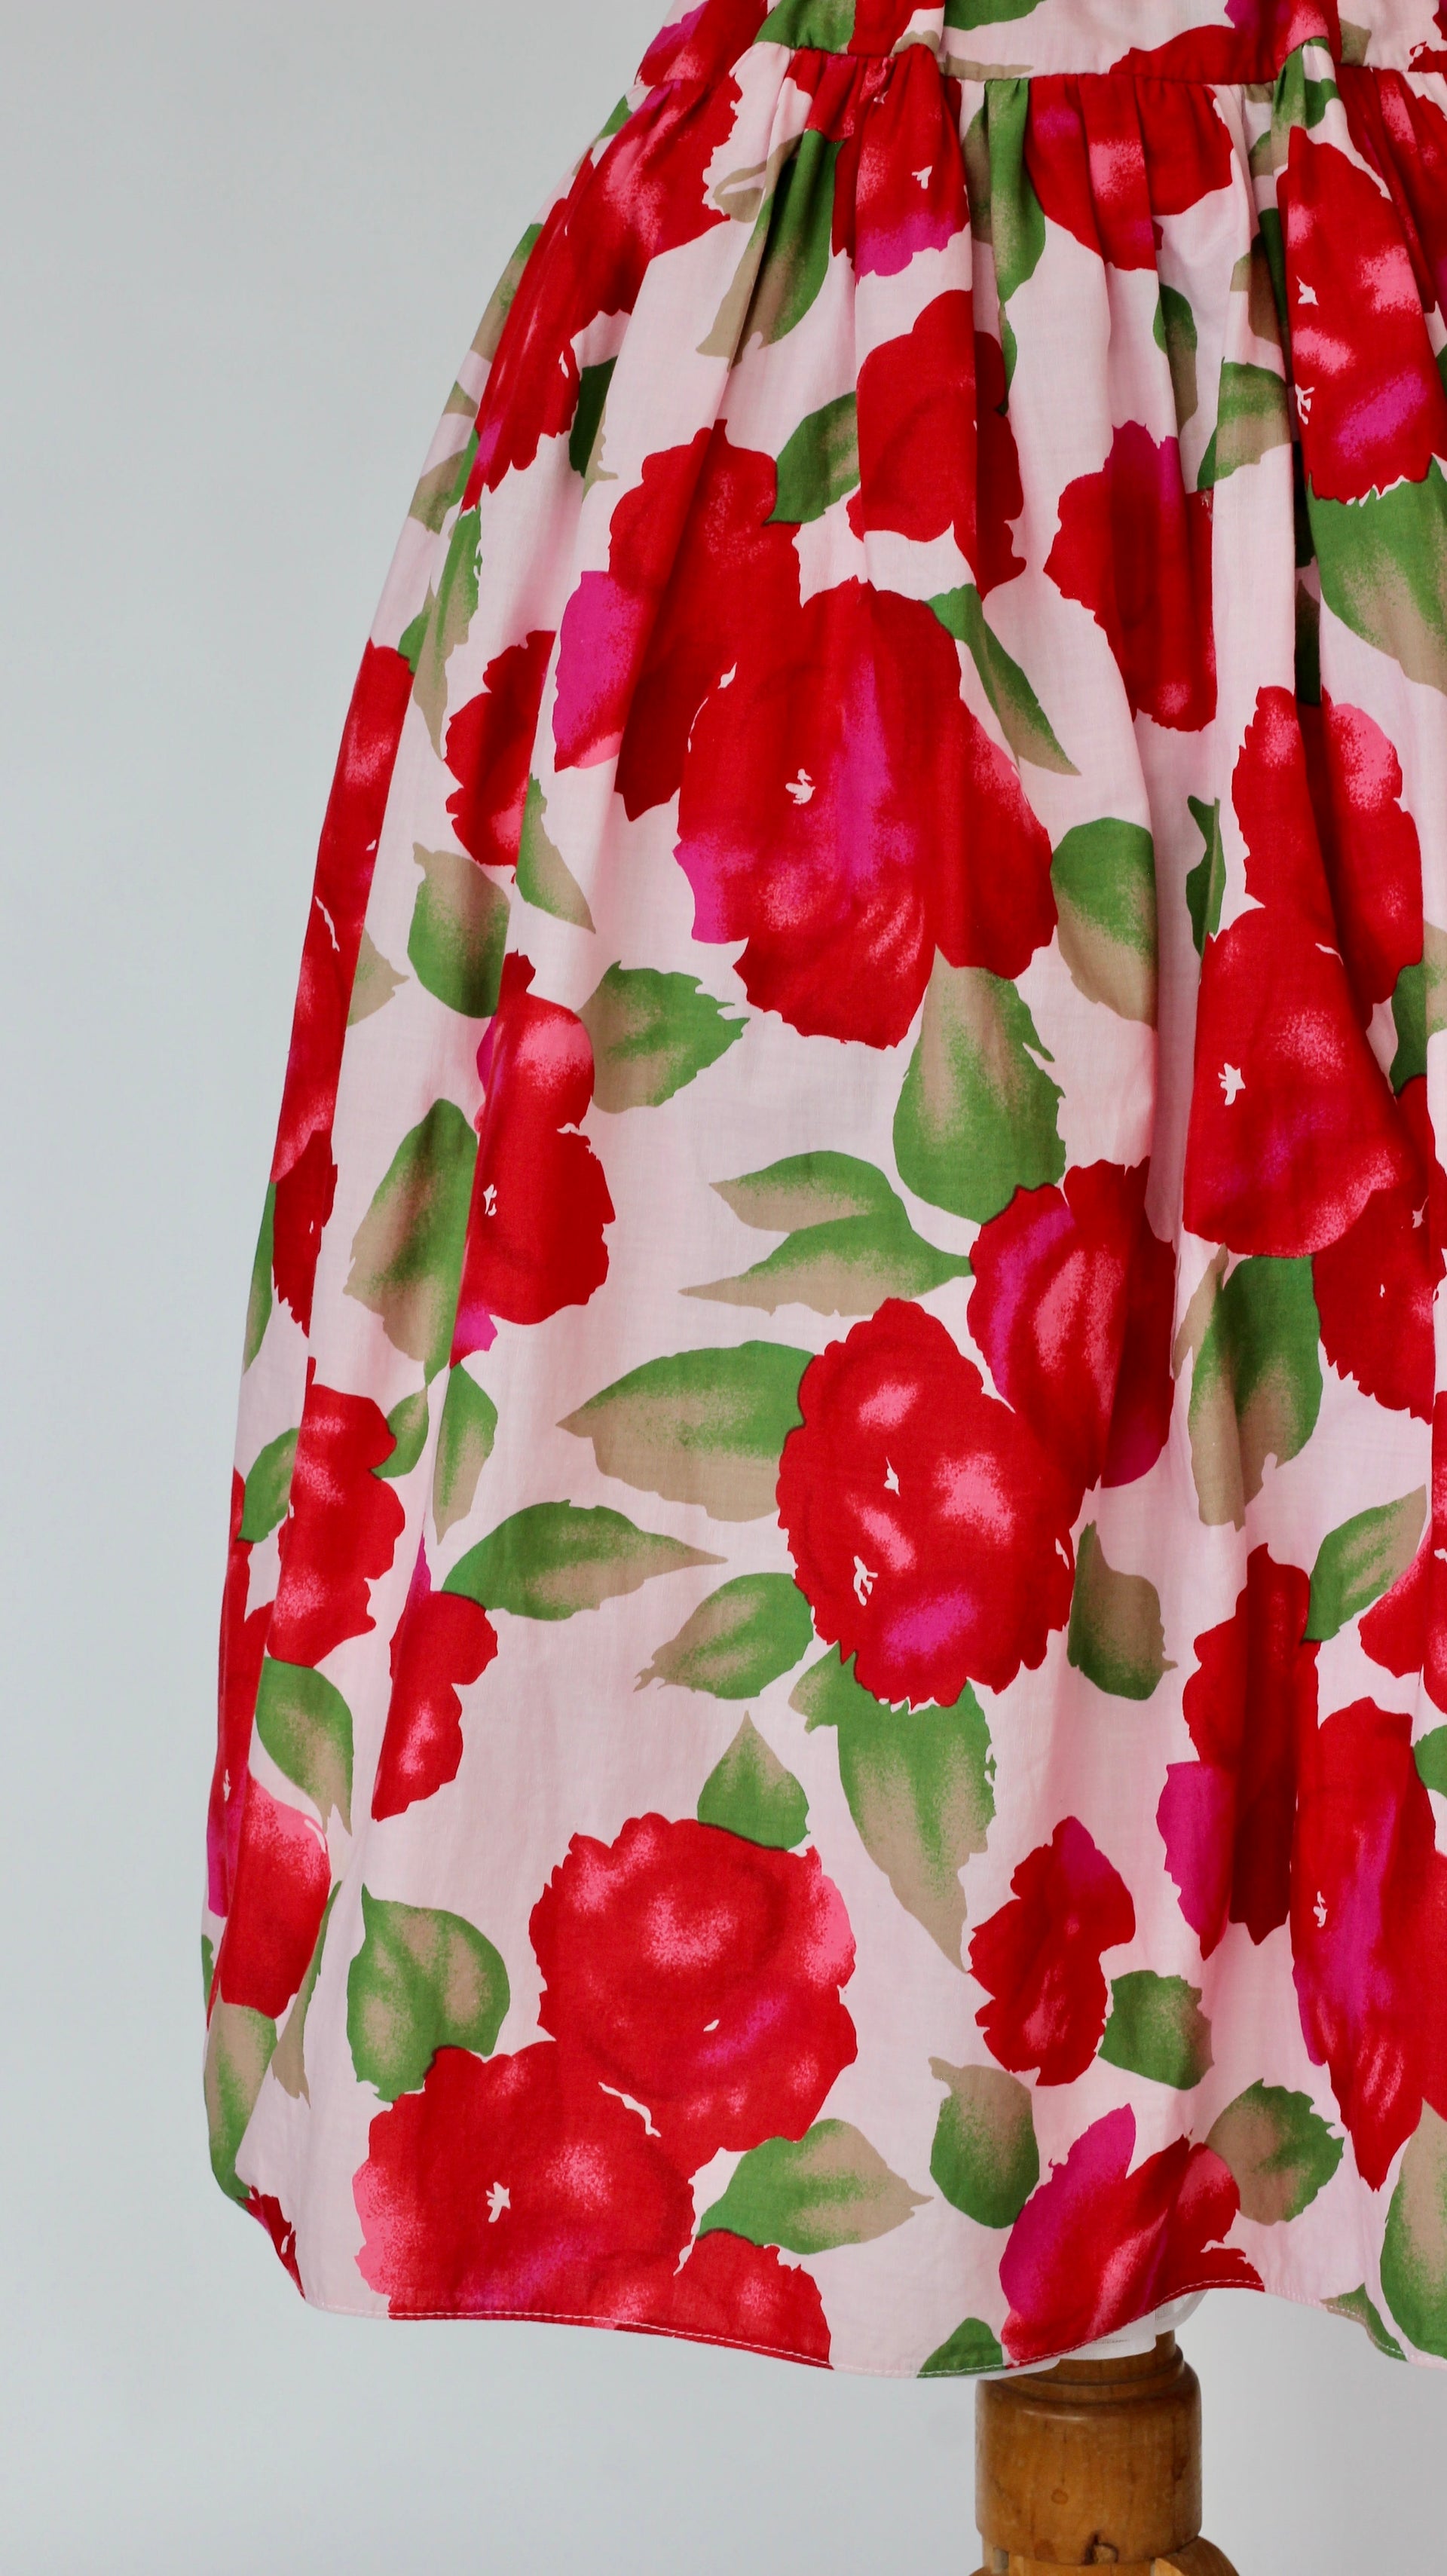 1980s Pale Pink Cotton Corsage Dress with Floral Print//Size M/L